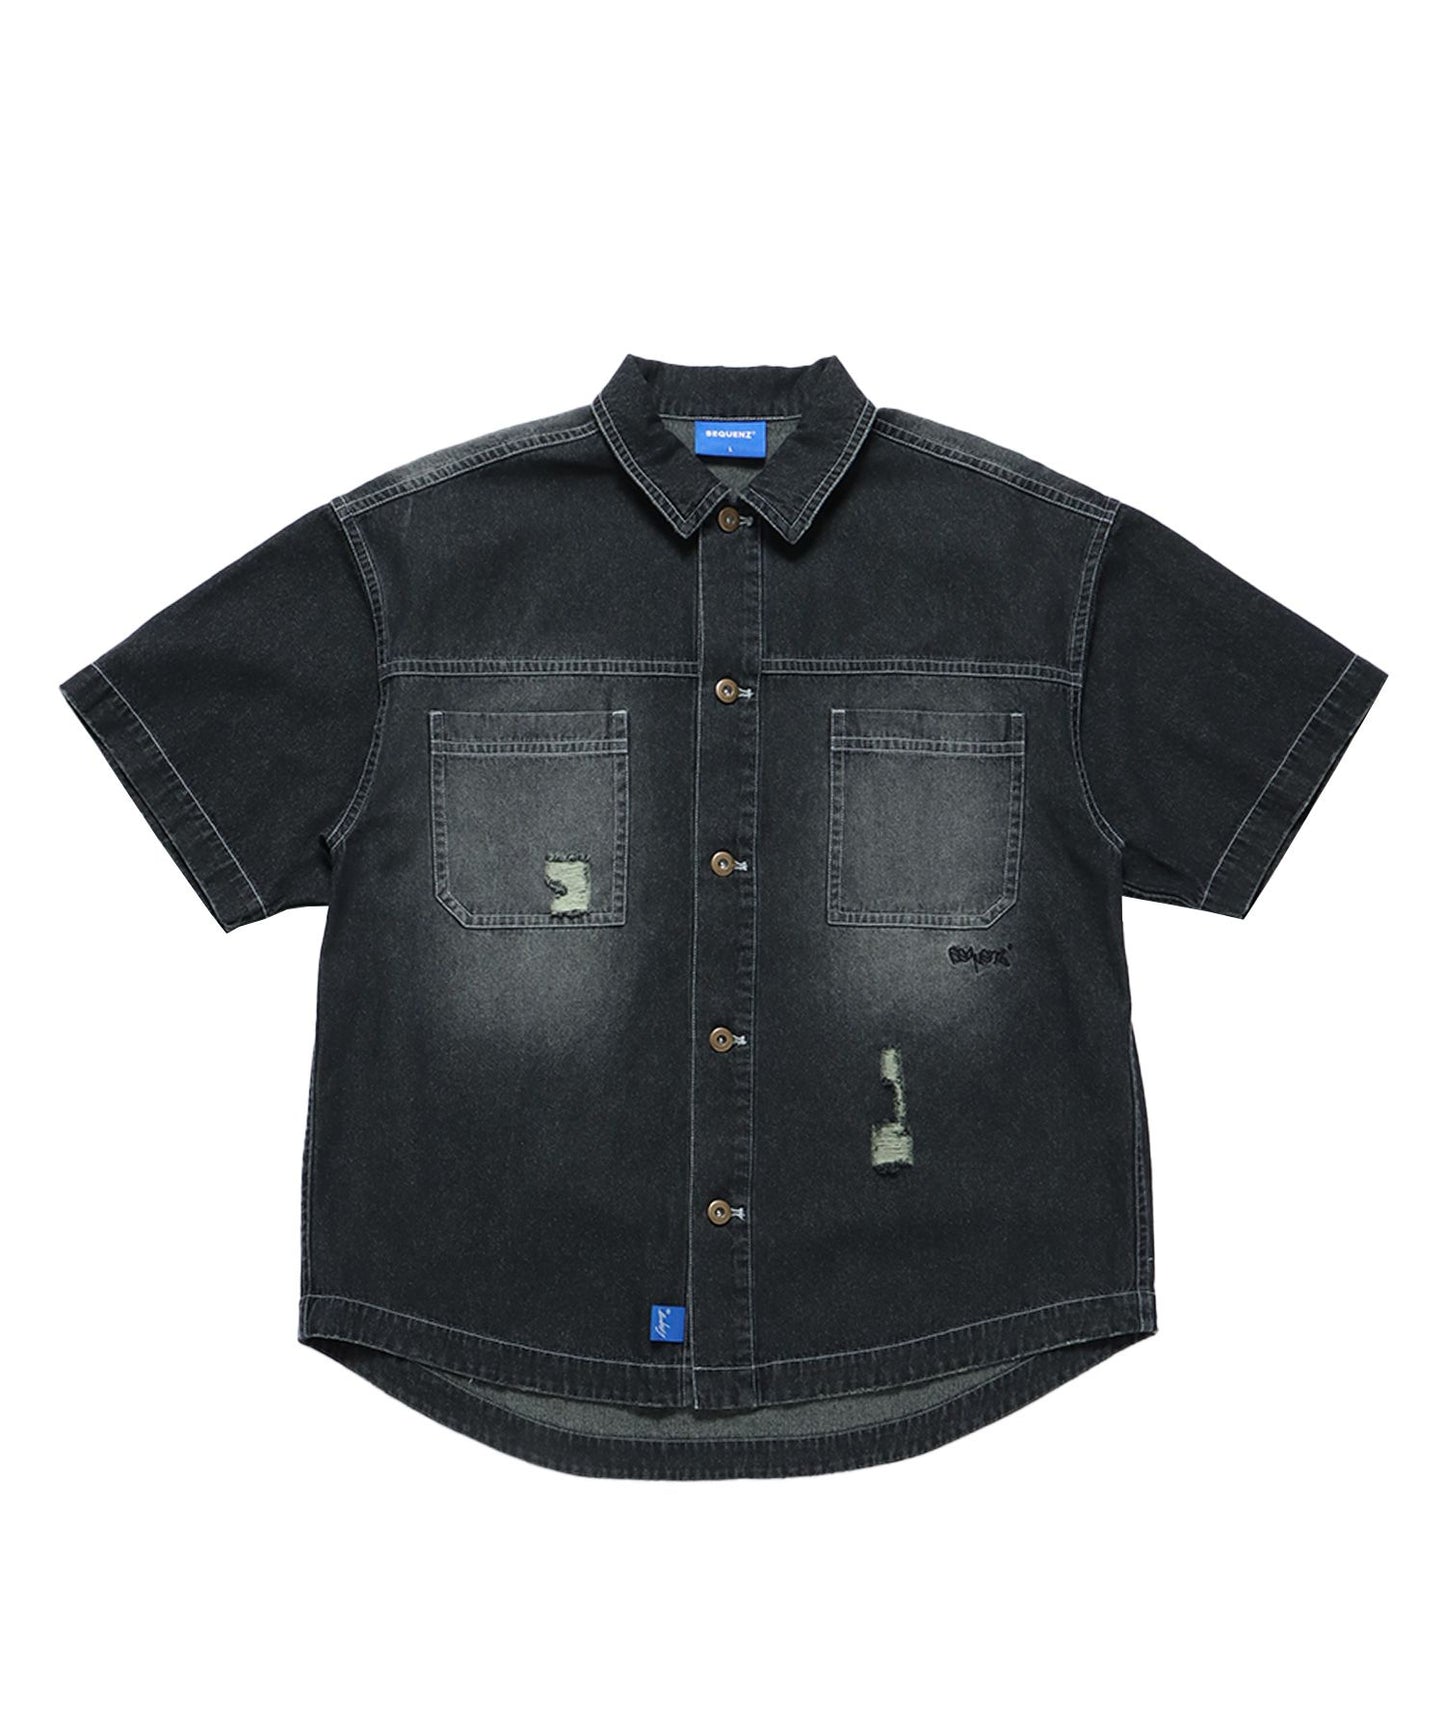 【SEQUENZ】CHECK CLERIC S/S SHIRT / 半袖シャツ オープンカラー オンブレチェック サークルロゴ ブランド ワンポイント ブラック